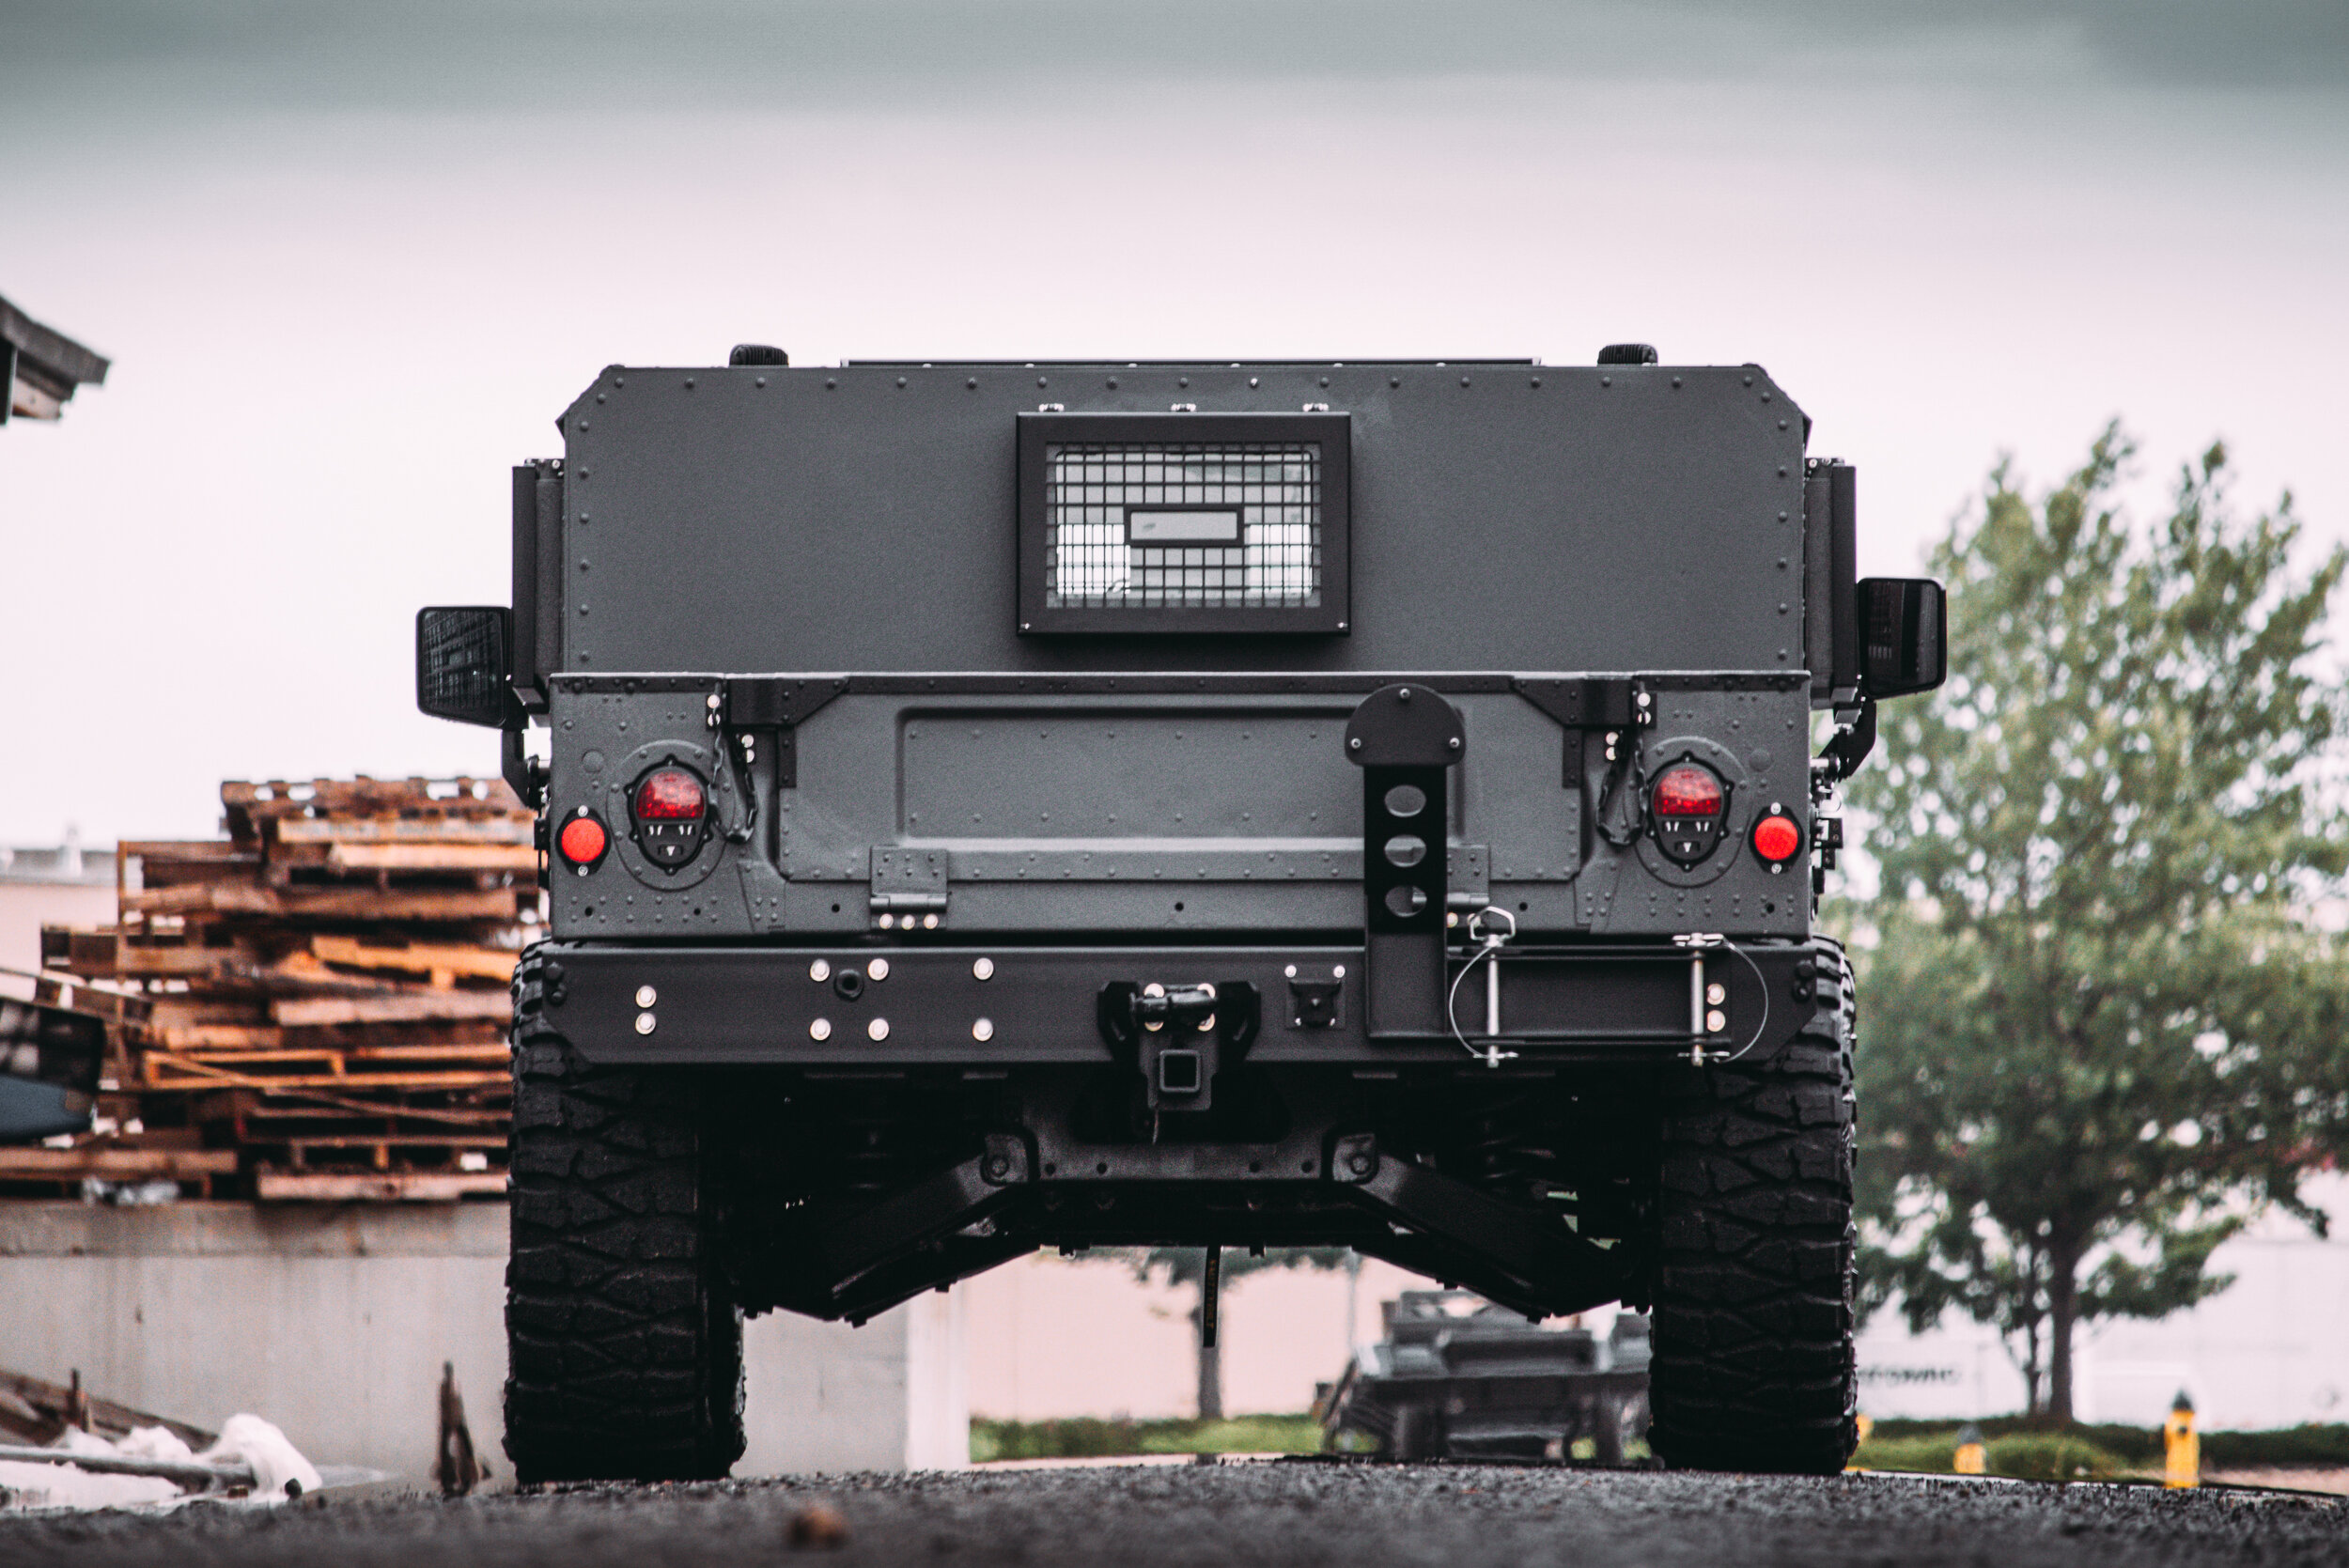 Armored Hummer H1 for Civilians like Humvee HMMWV — Plan B Trucks